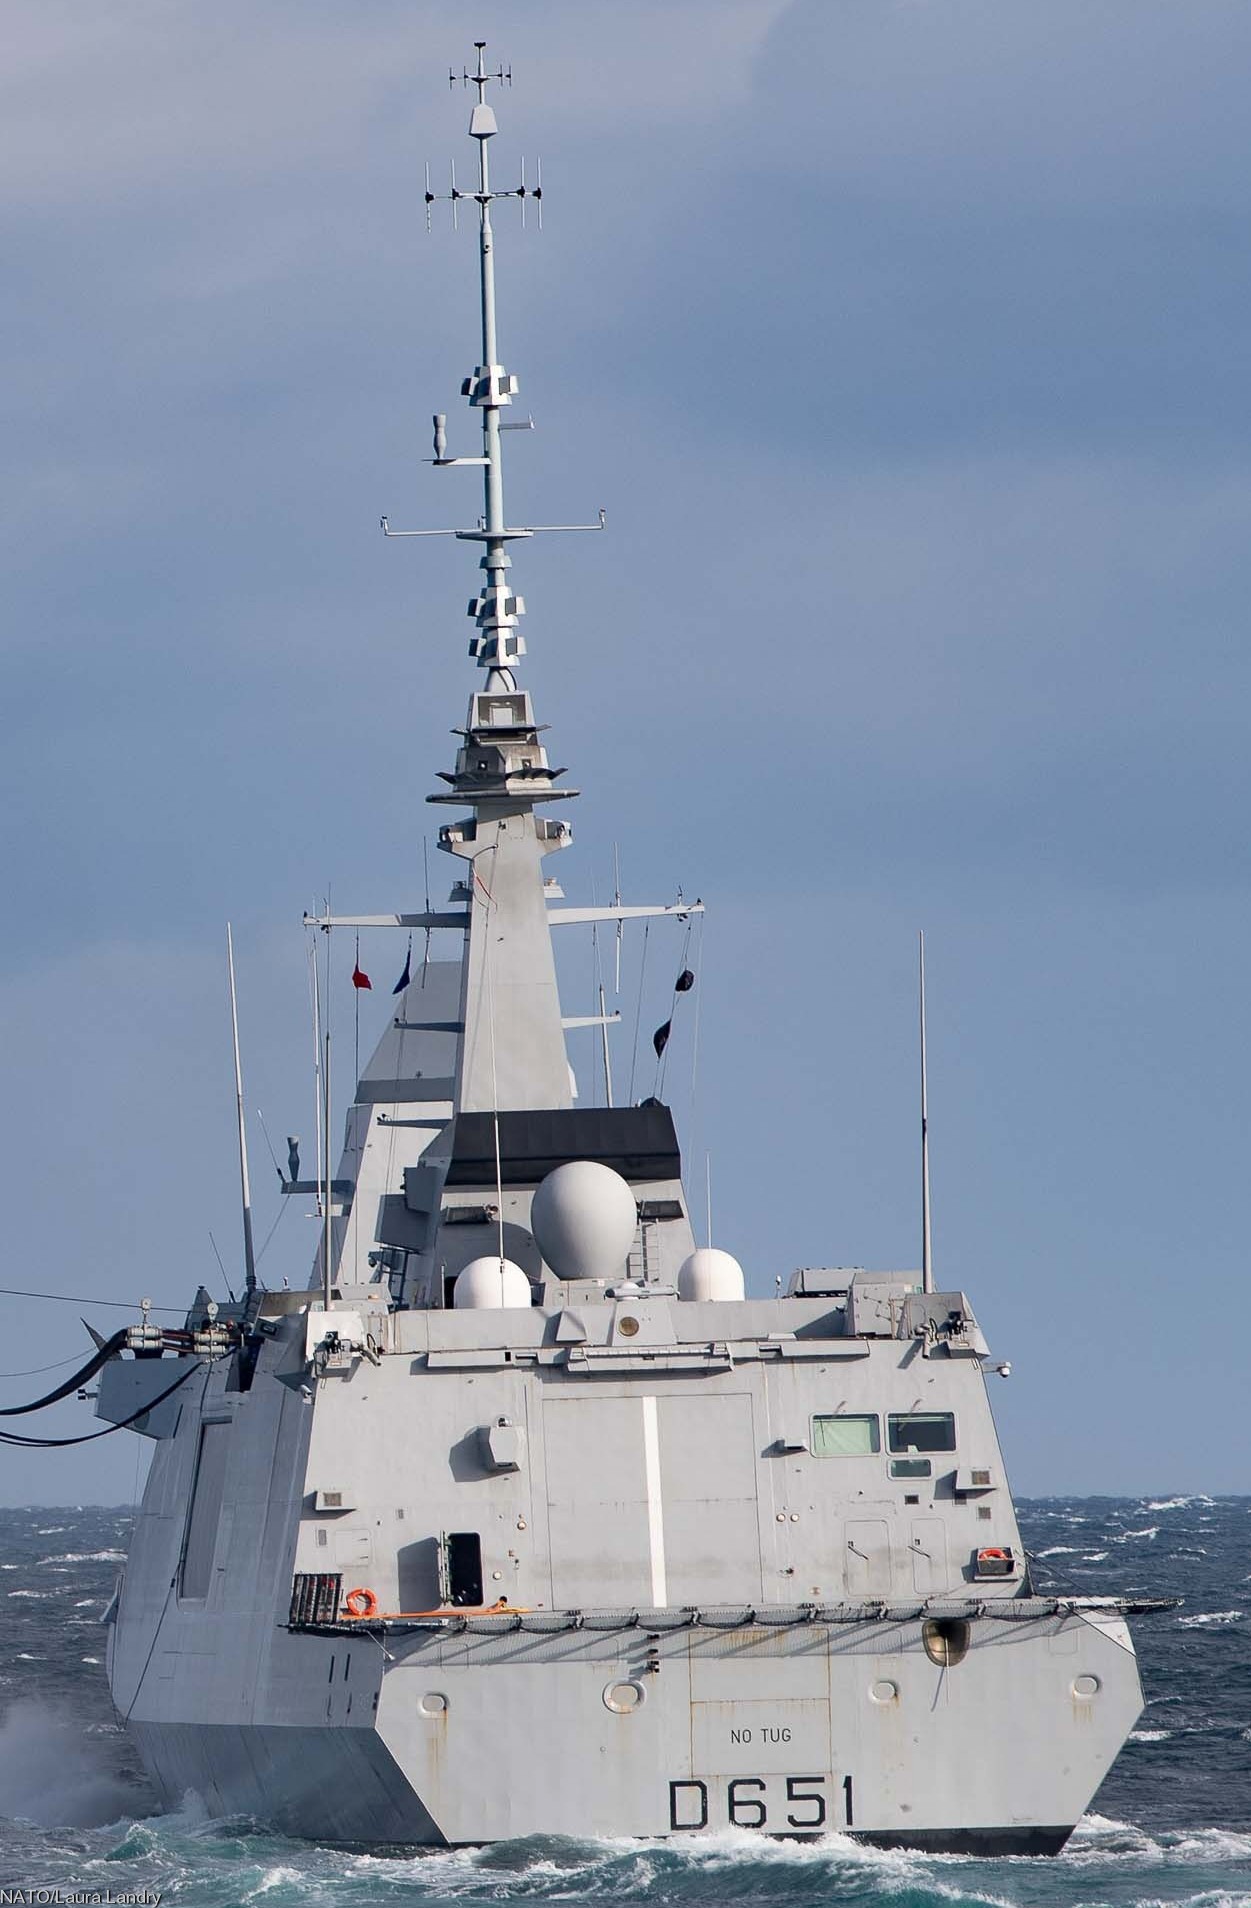 d-651 fs normandie fremm aquitaine class frigate fregate multi purpose french navy marine nationale 13